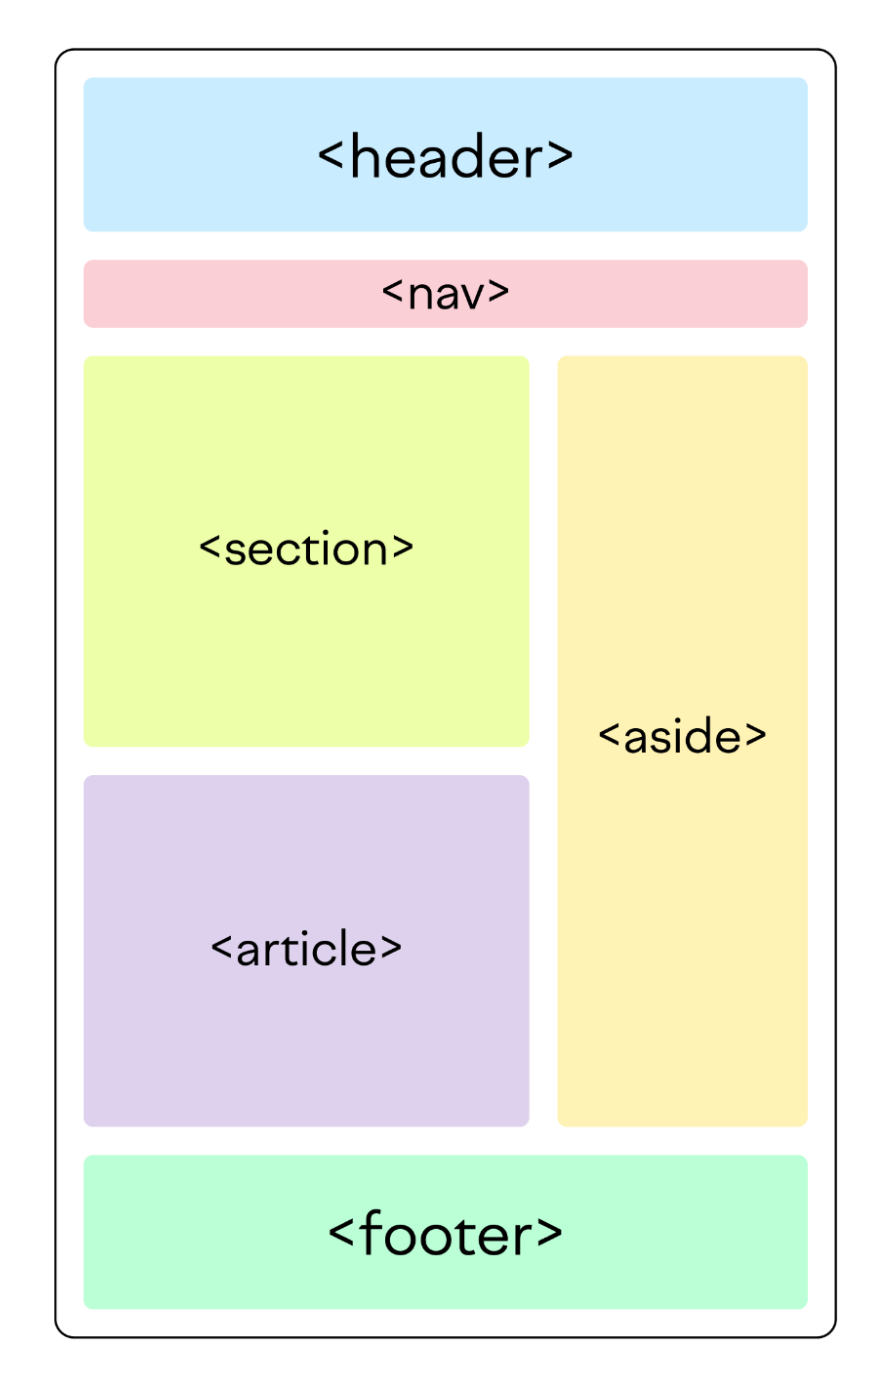 Semantic HTML